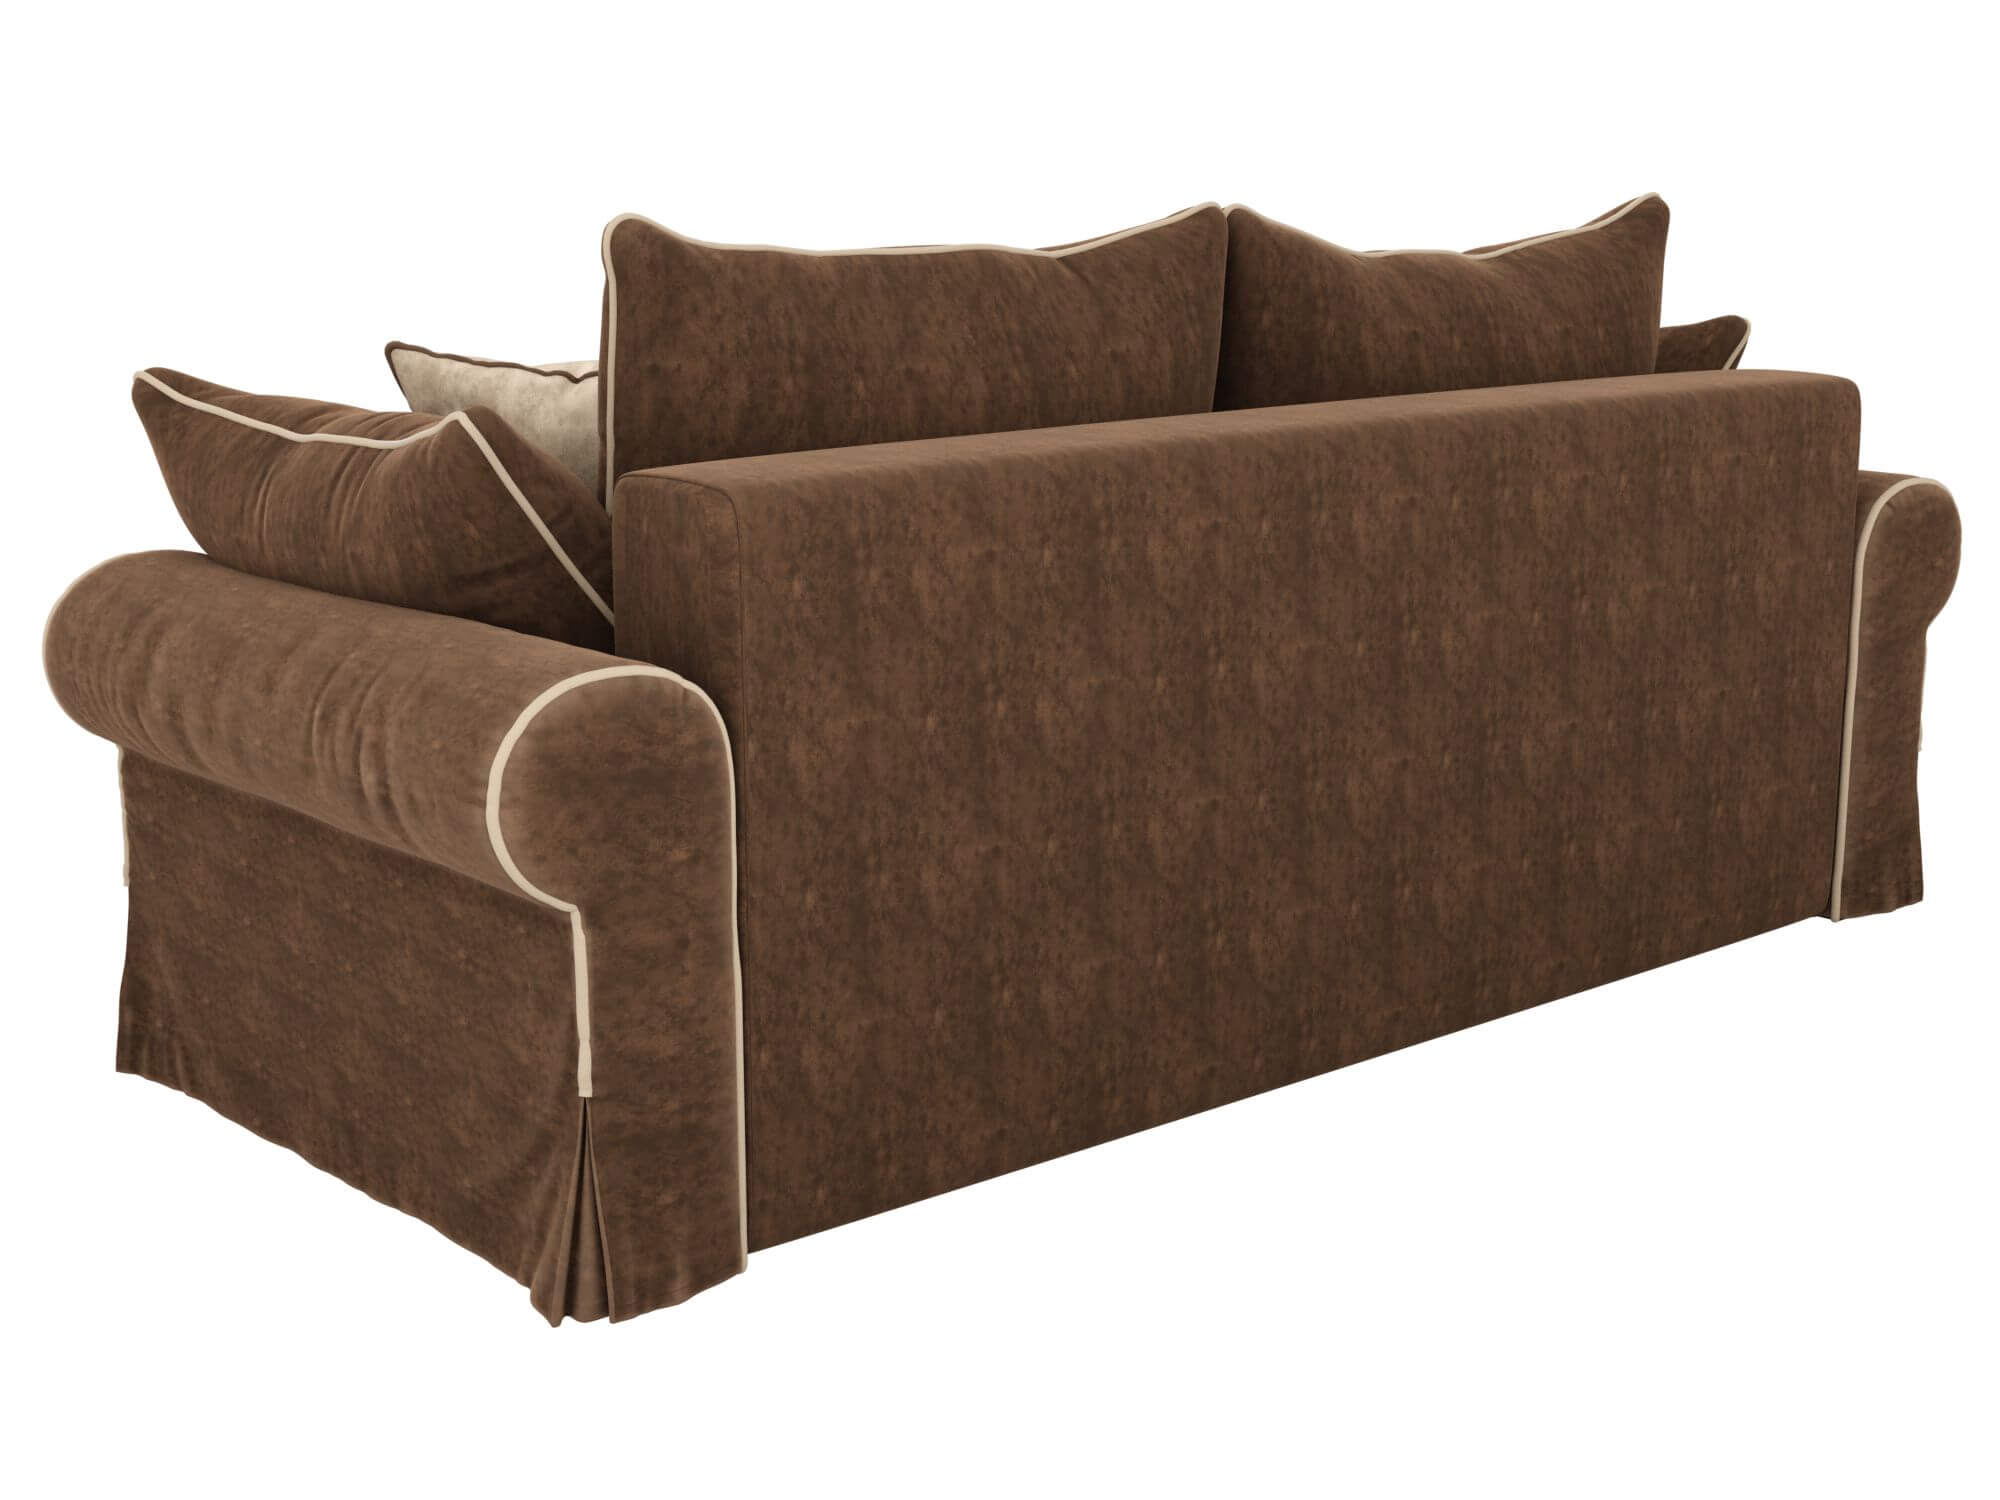 Деревянный диван с мягкими подушками